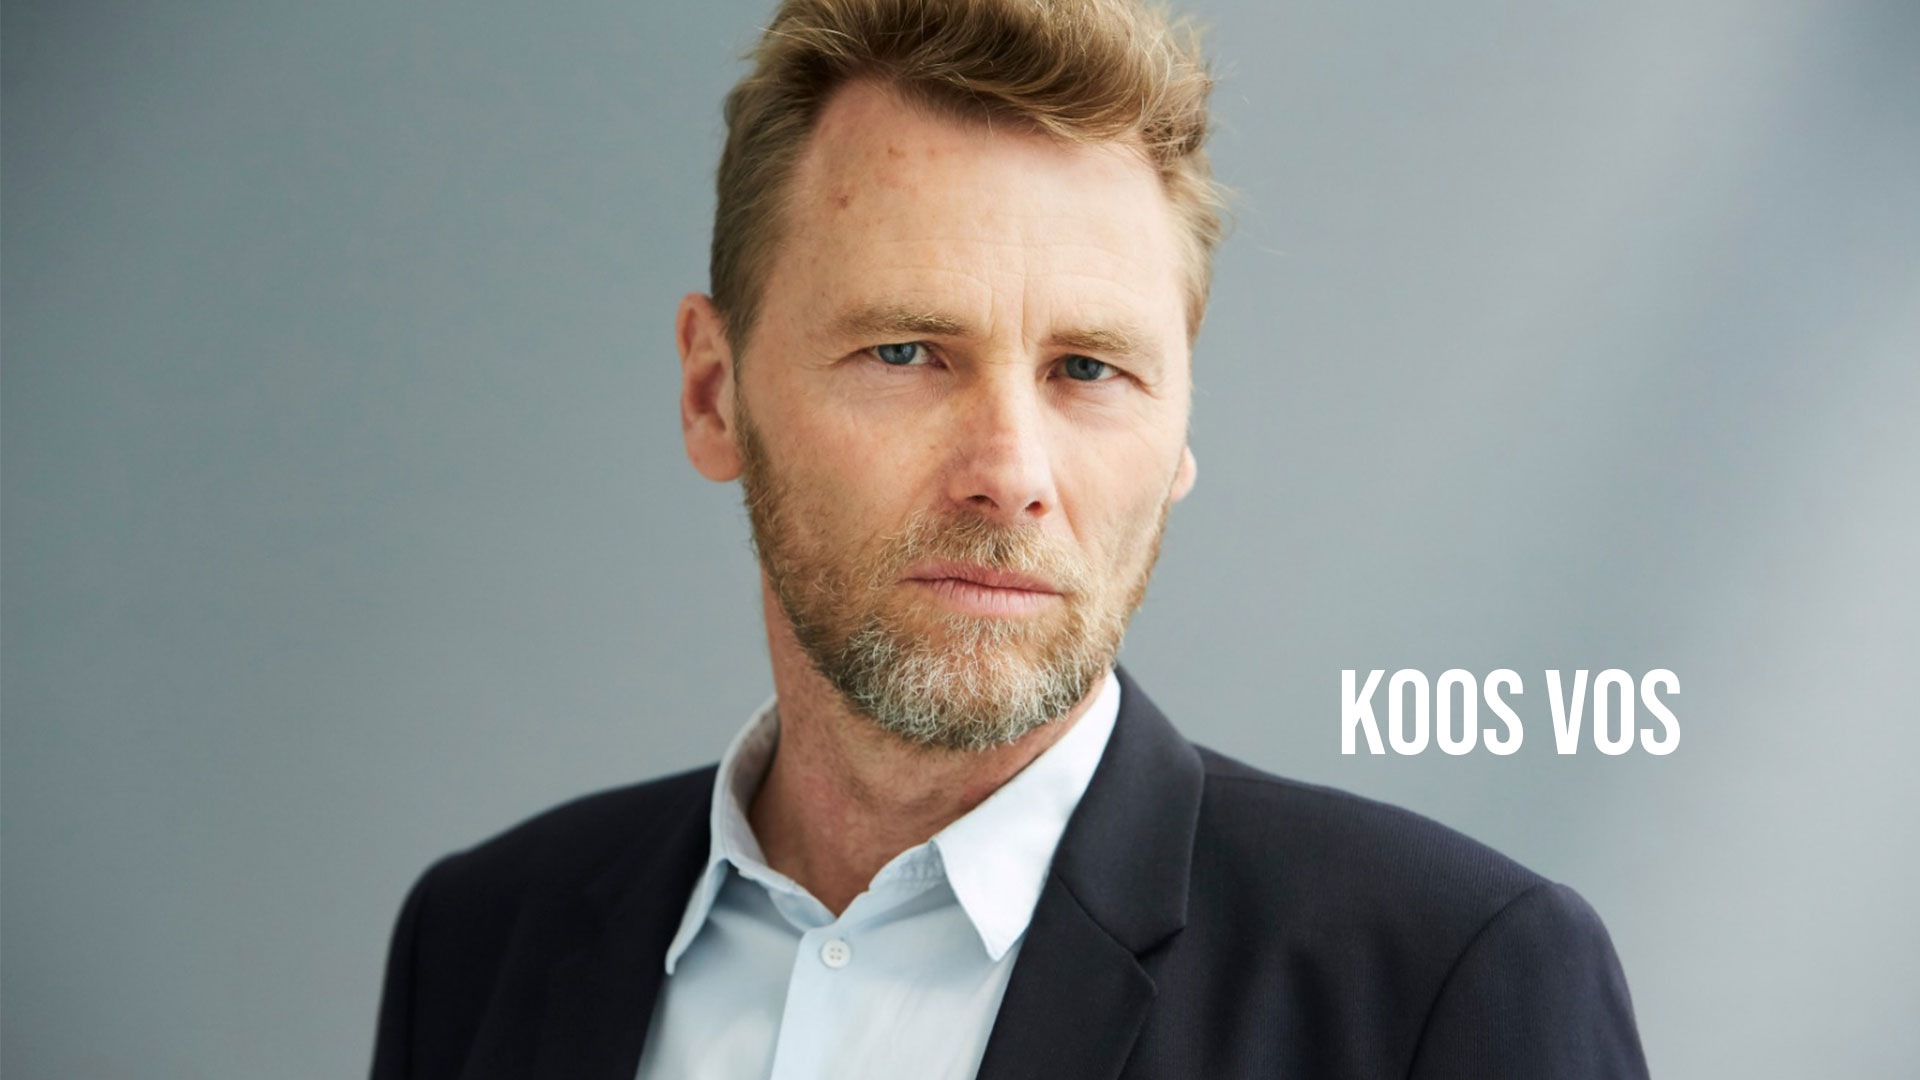 Koos Vos | Videobook Actor